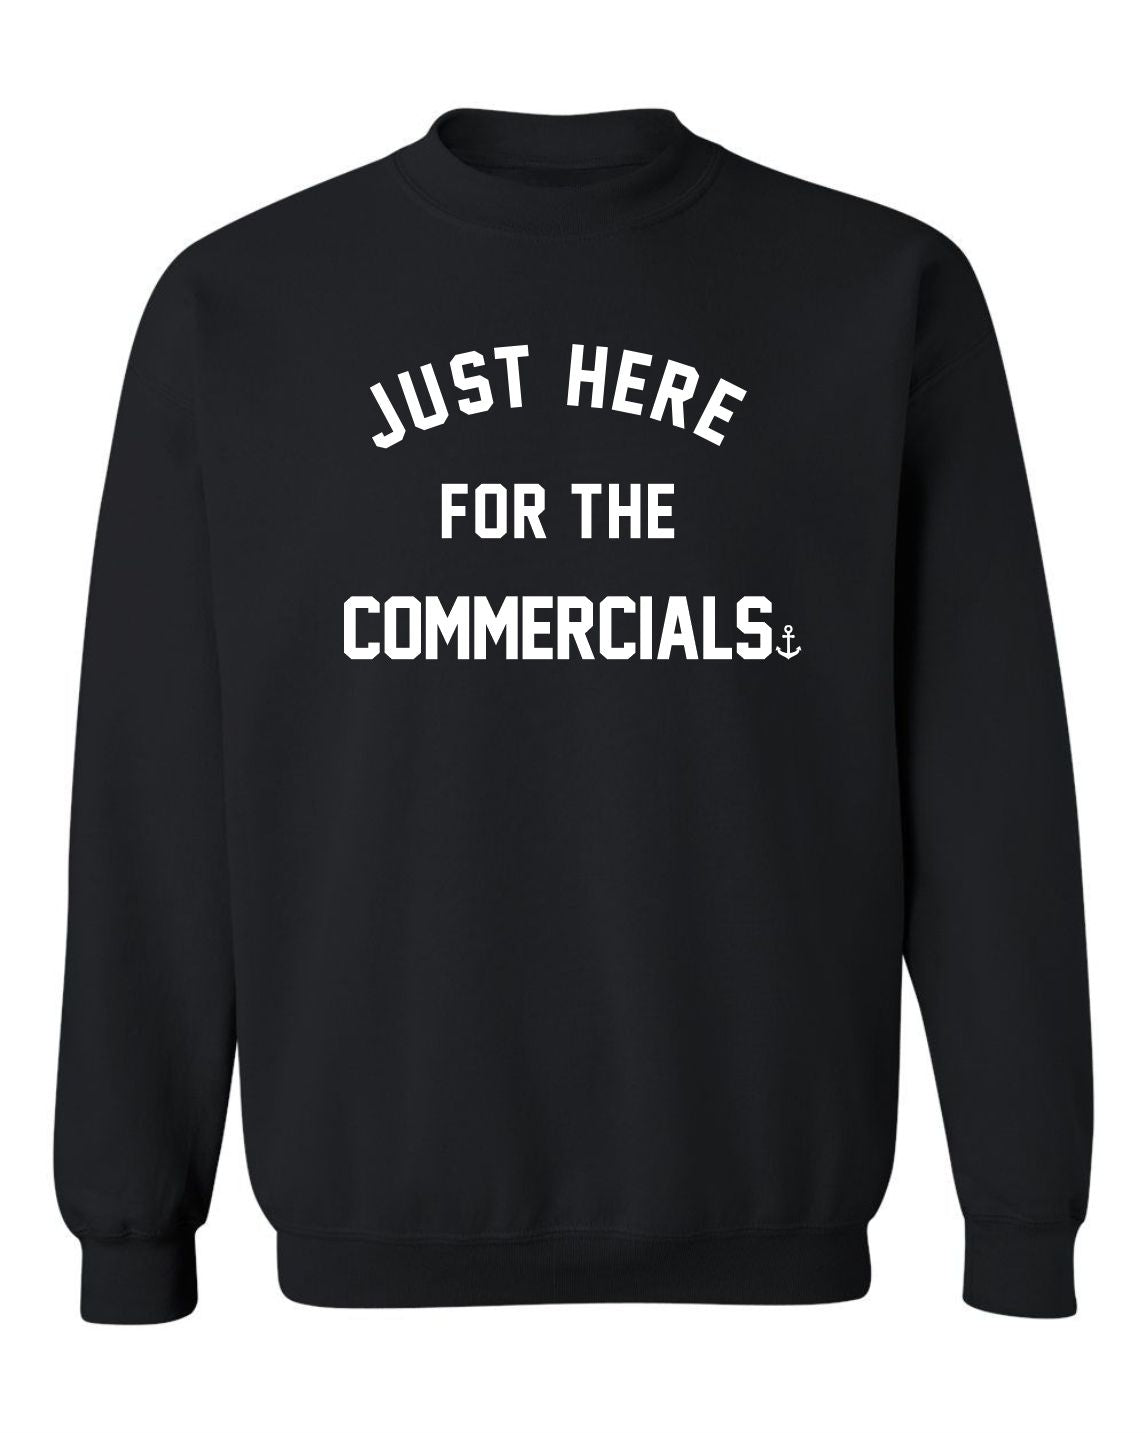 "Just Here For The Commercials" Unisex Crewneck Sweatshirt